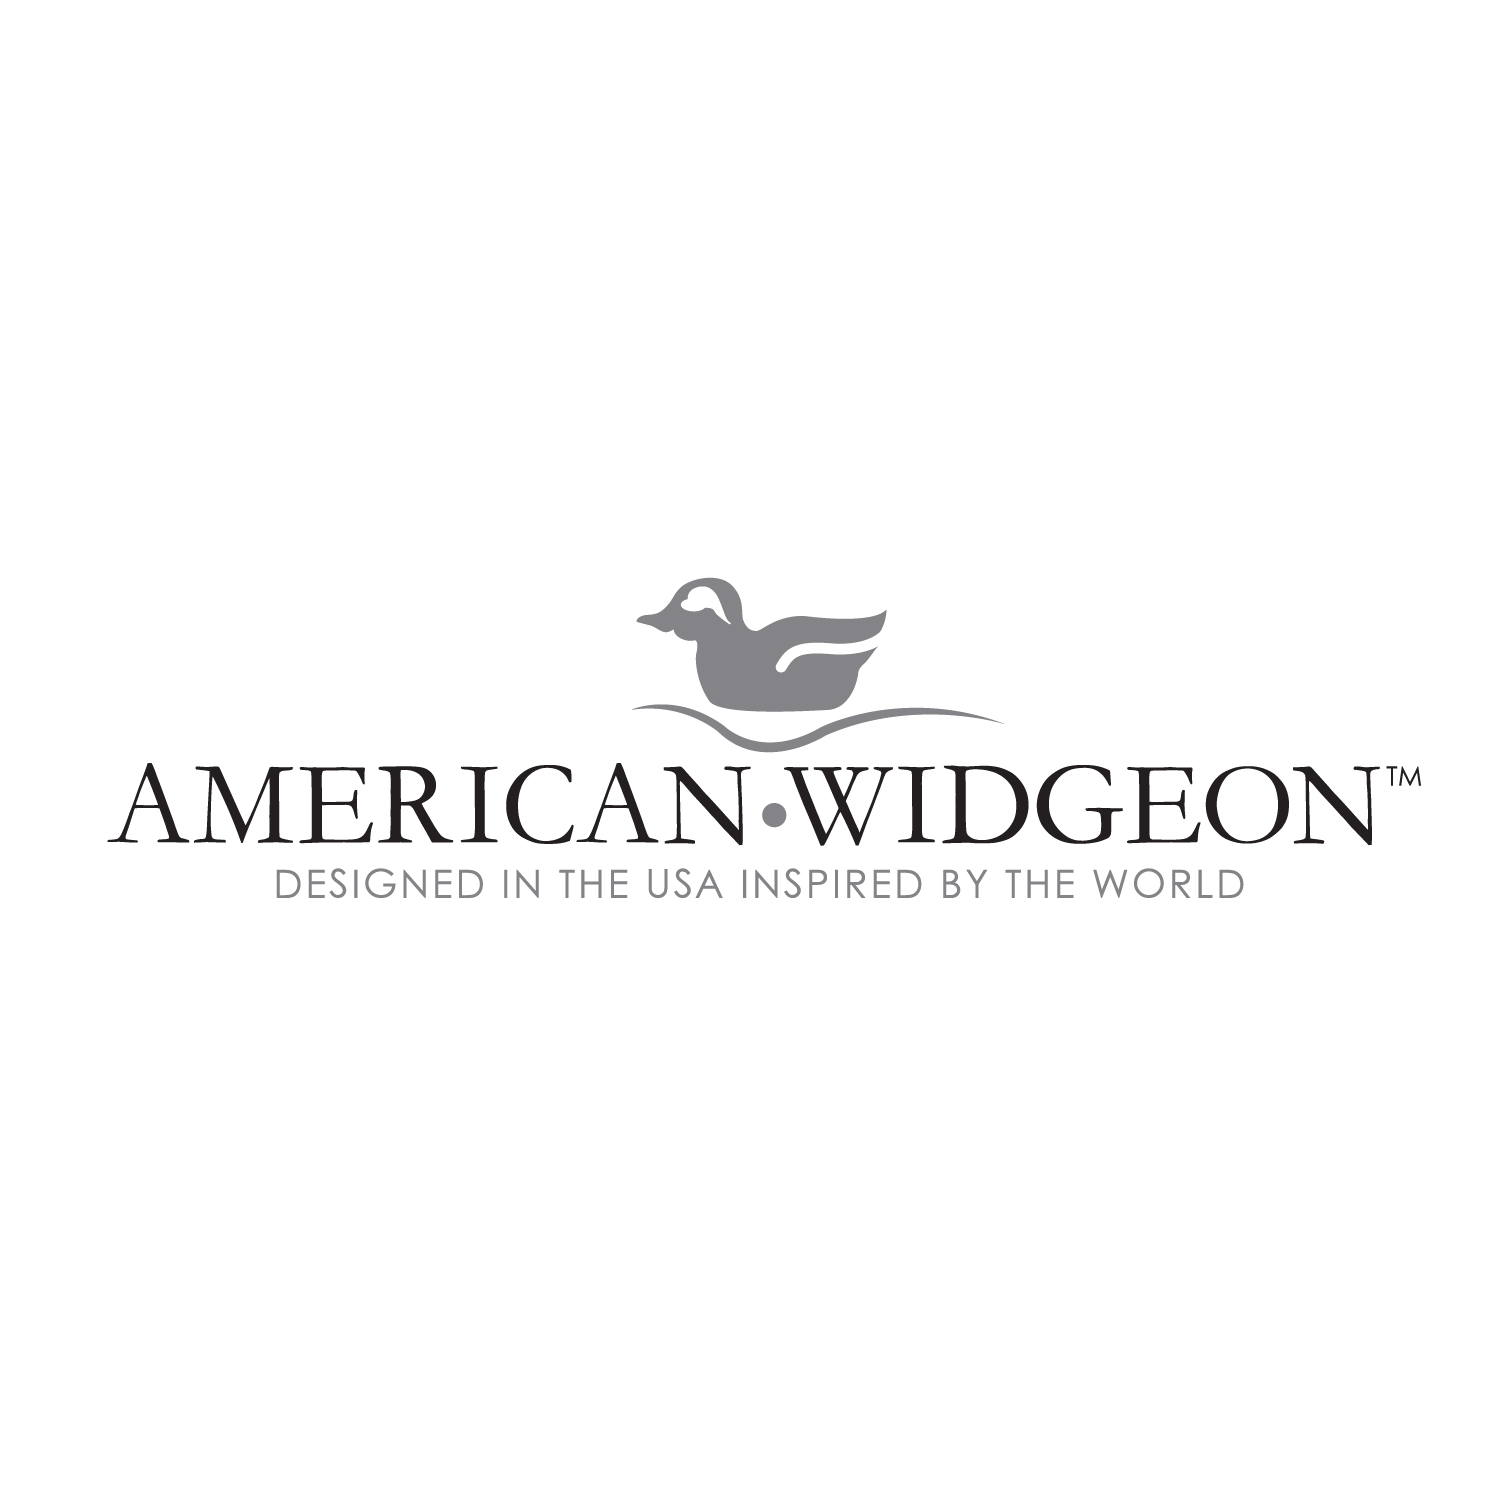 widgeon logo square.jpg